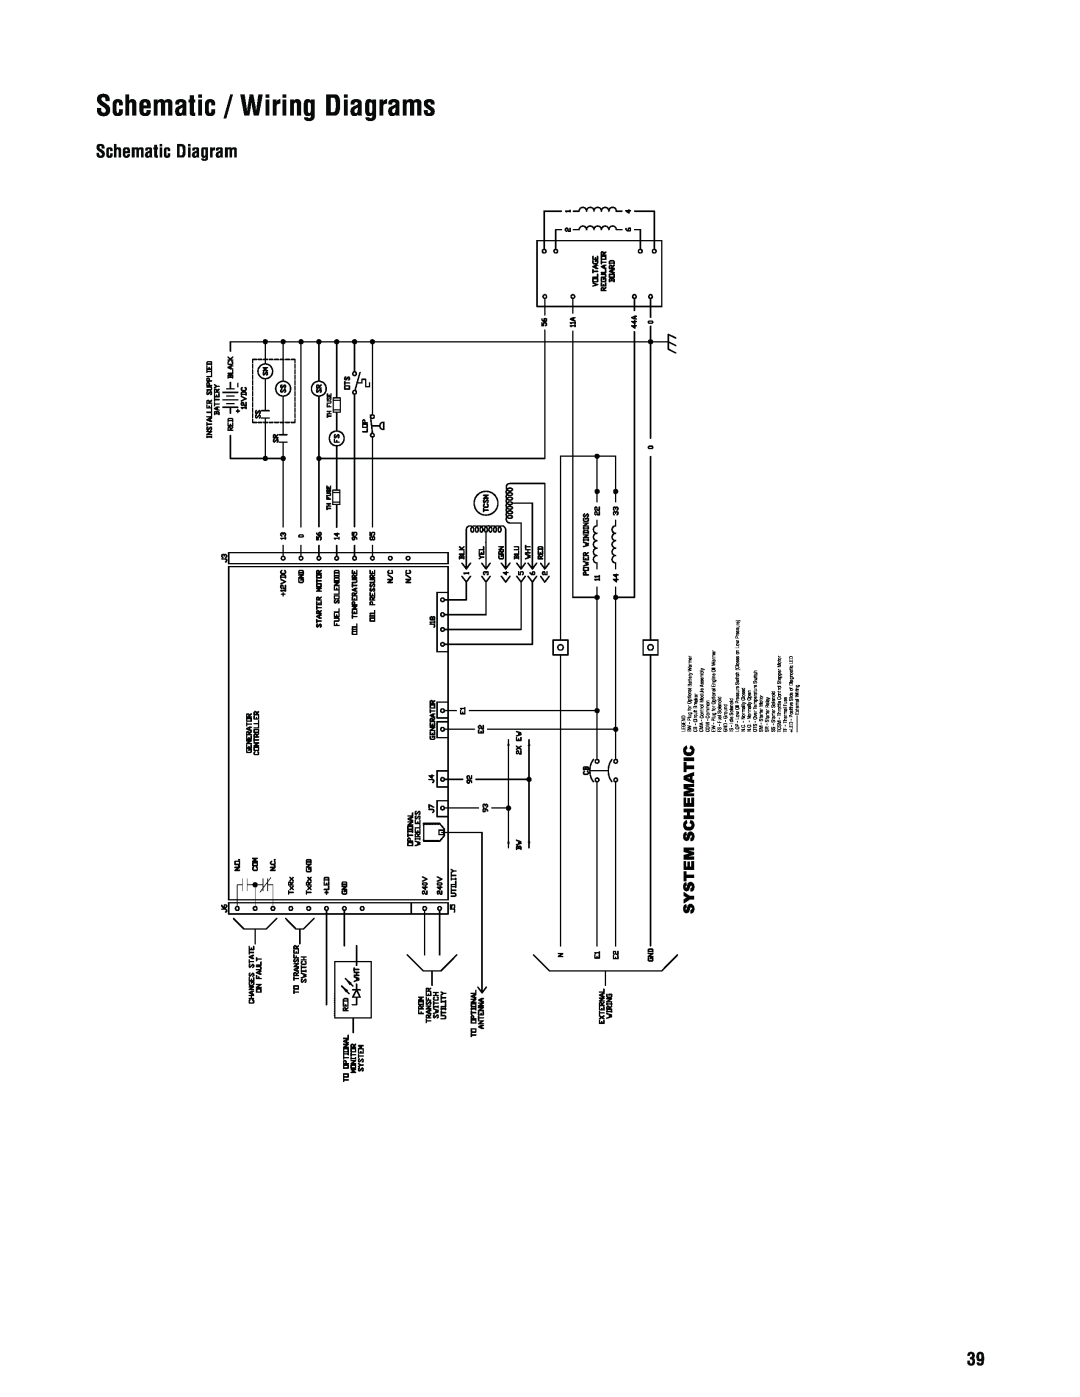 Rheem Rheem / Ruud standby generator, GEN20AD-E, GEN16AD-E, GEN15ADC-E Schematic / Wiring Diagrams, Schematic Diagram 